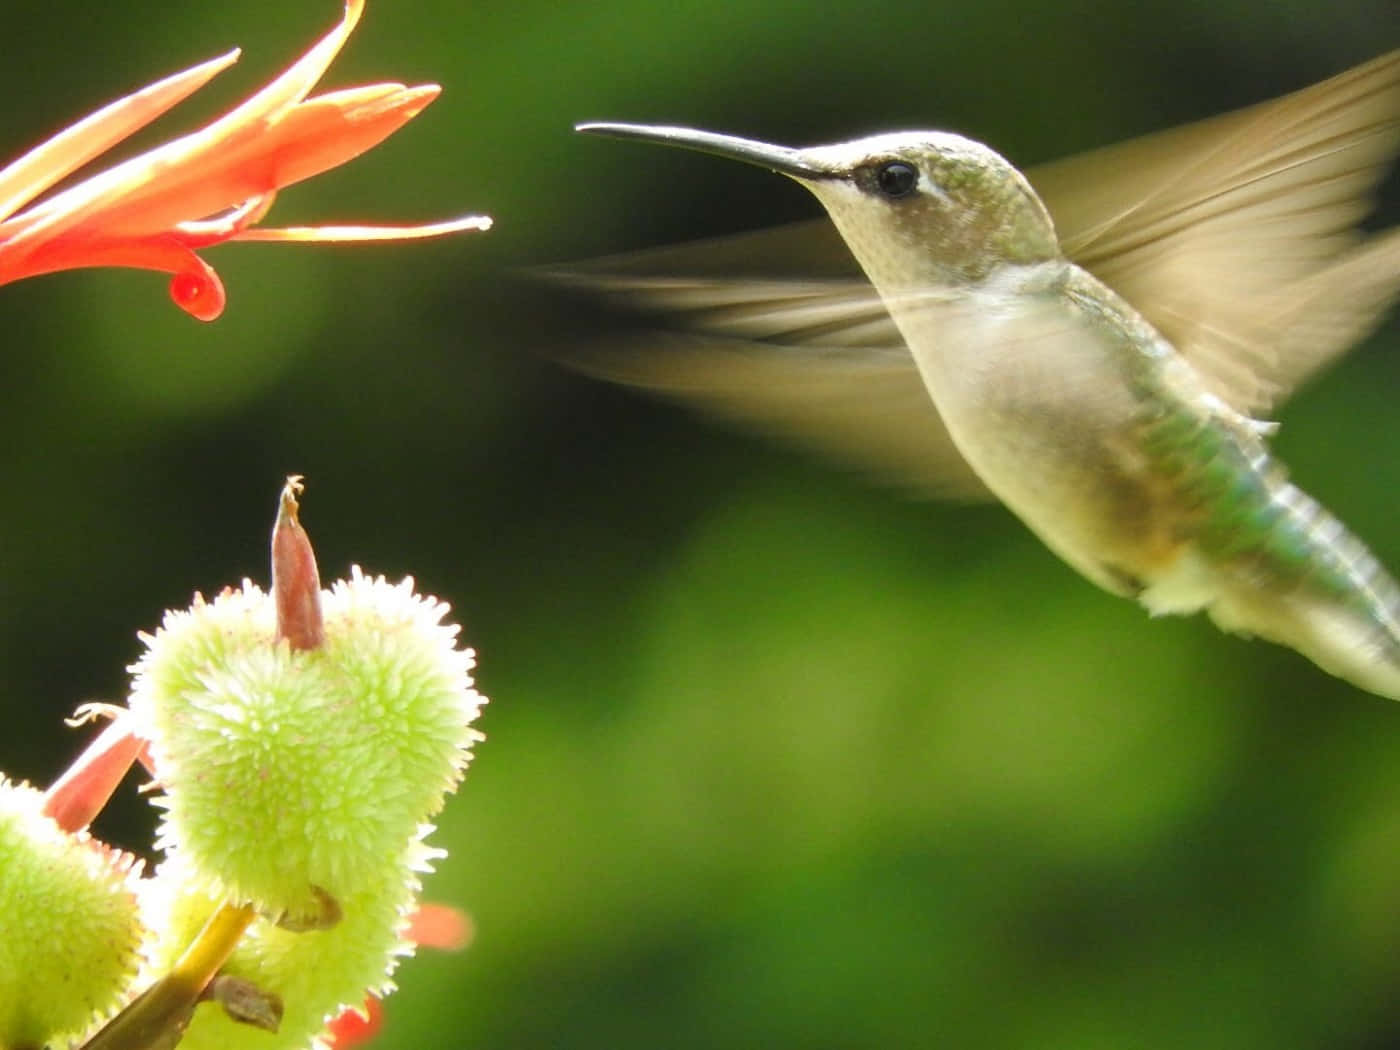 “The Beauty of Nature: Female Hummingbird”